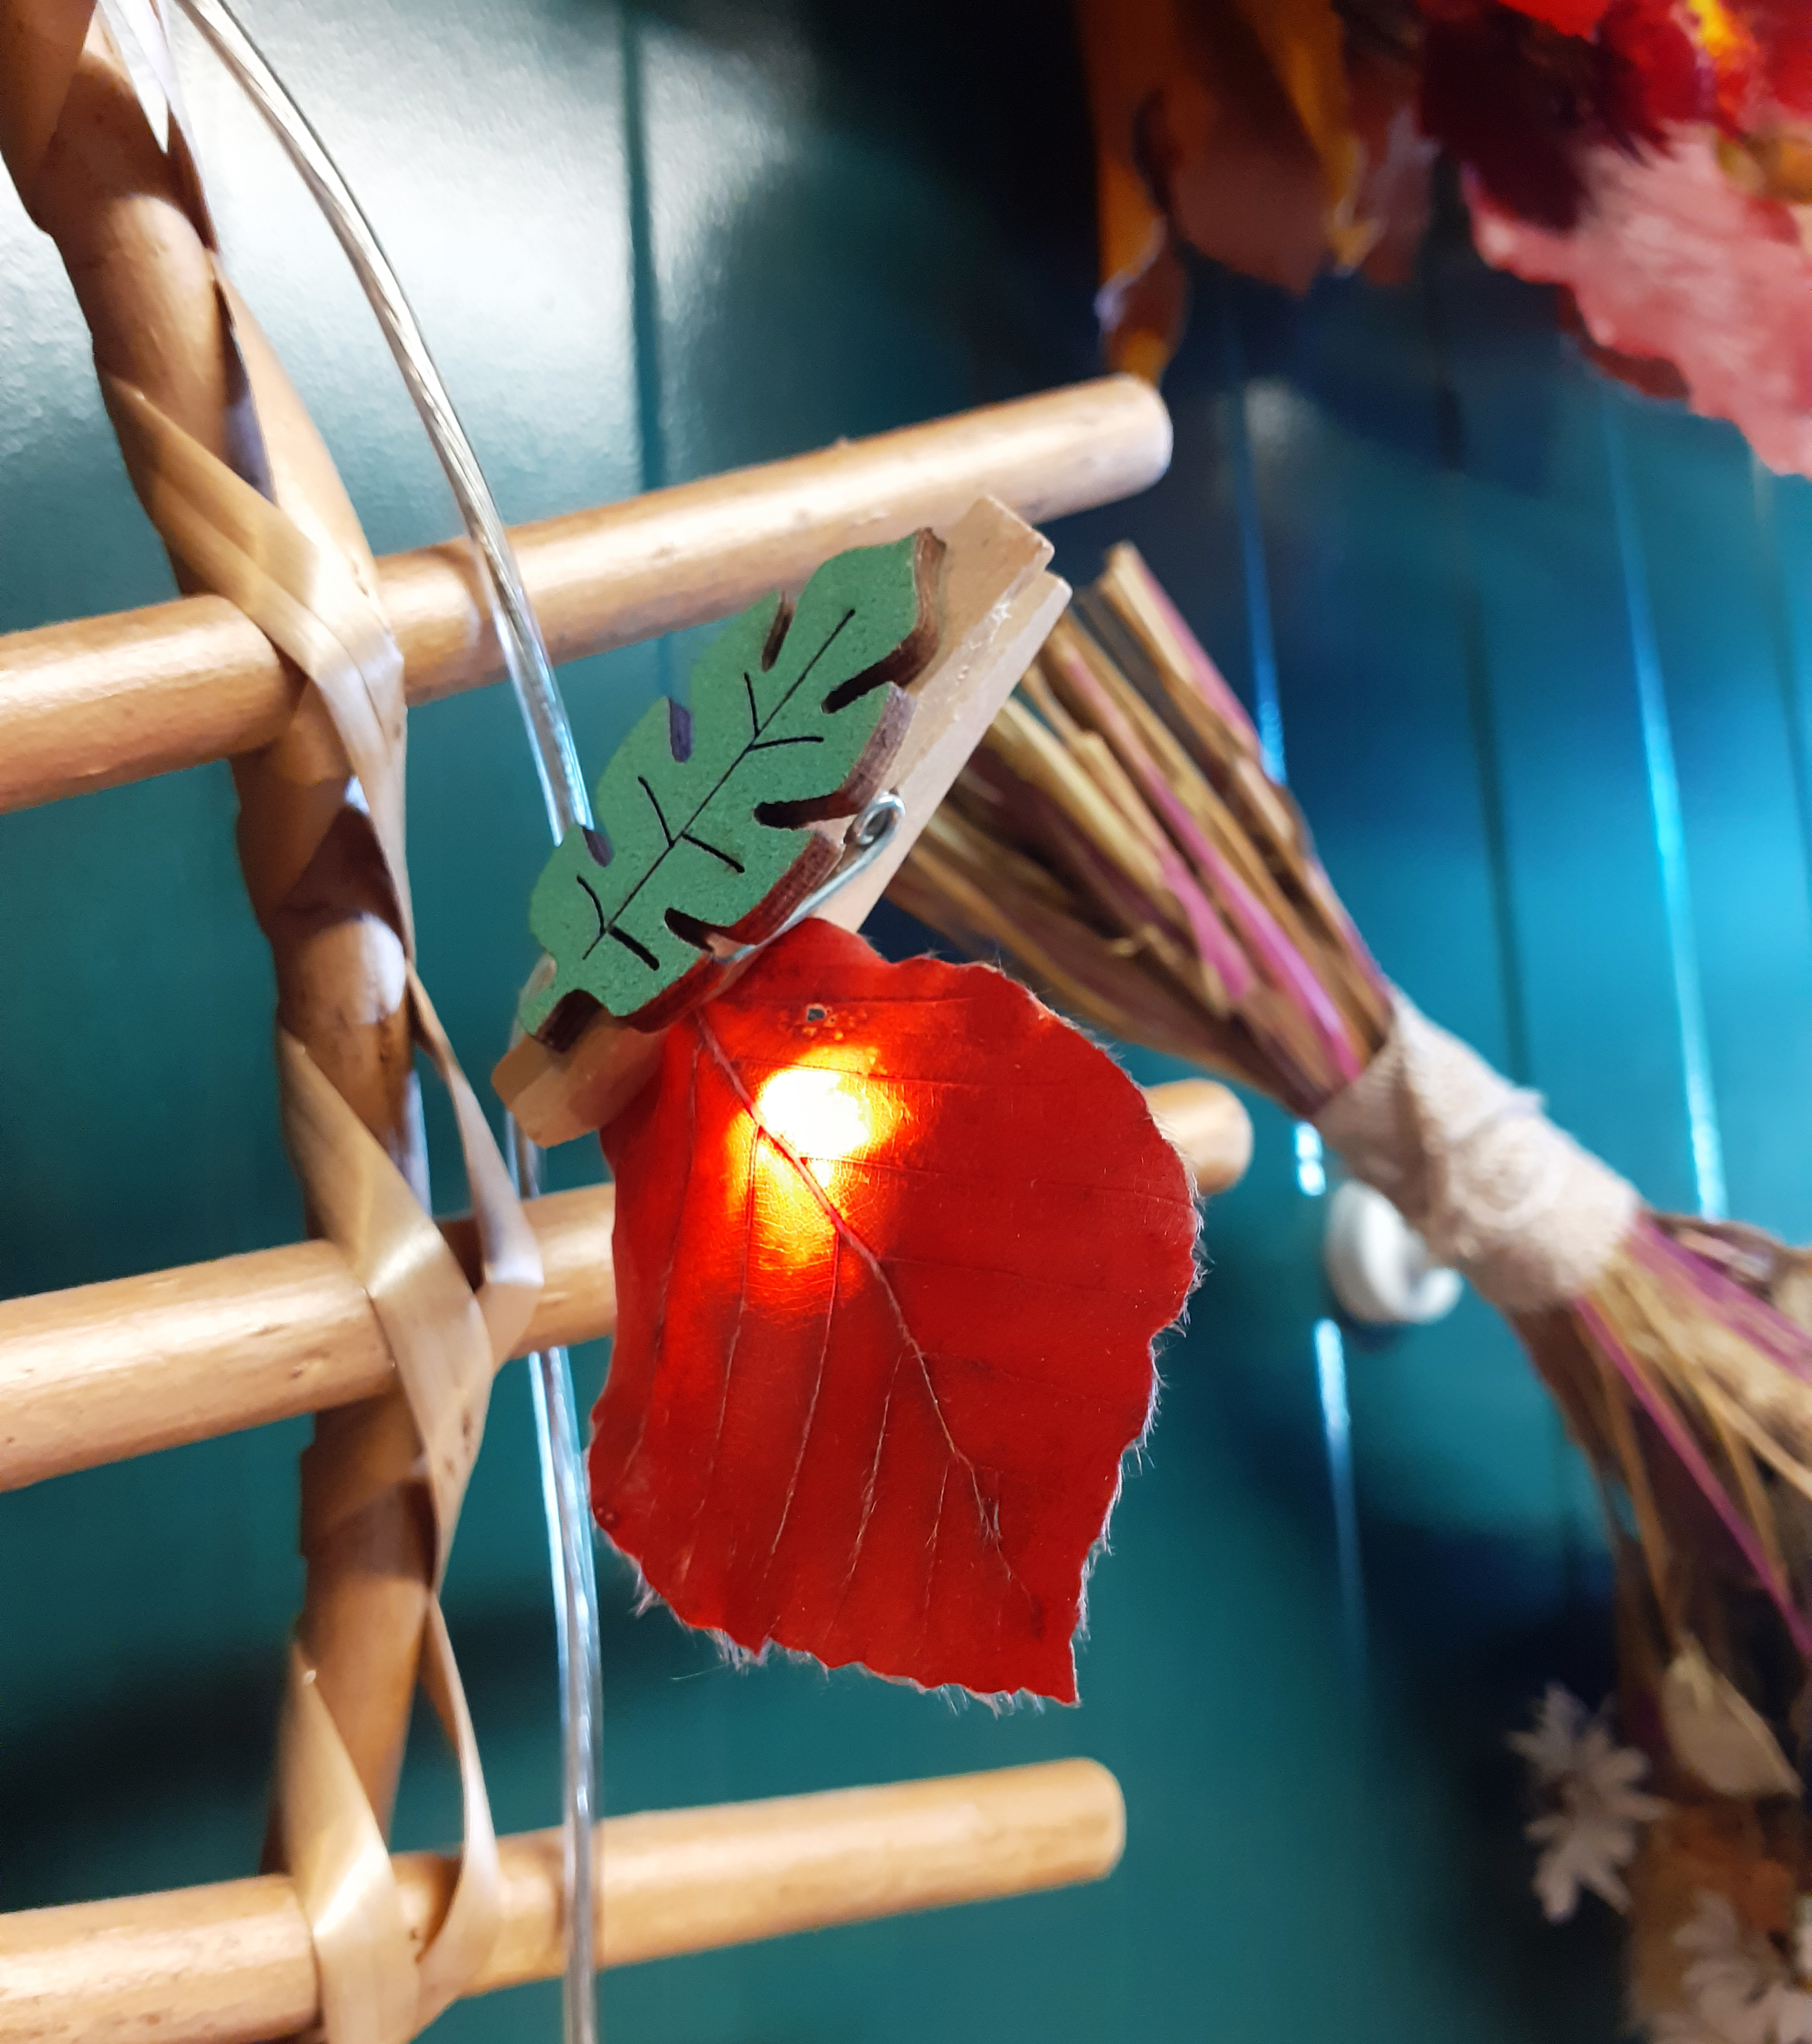 Guirlande lumineuse décorative en corde DIY : étapes simples - blog déco